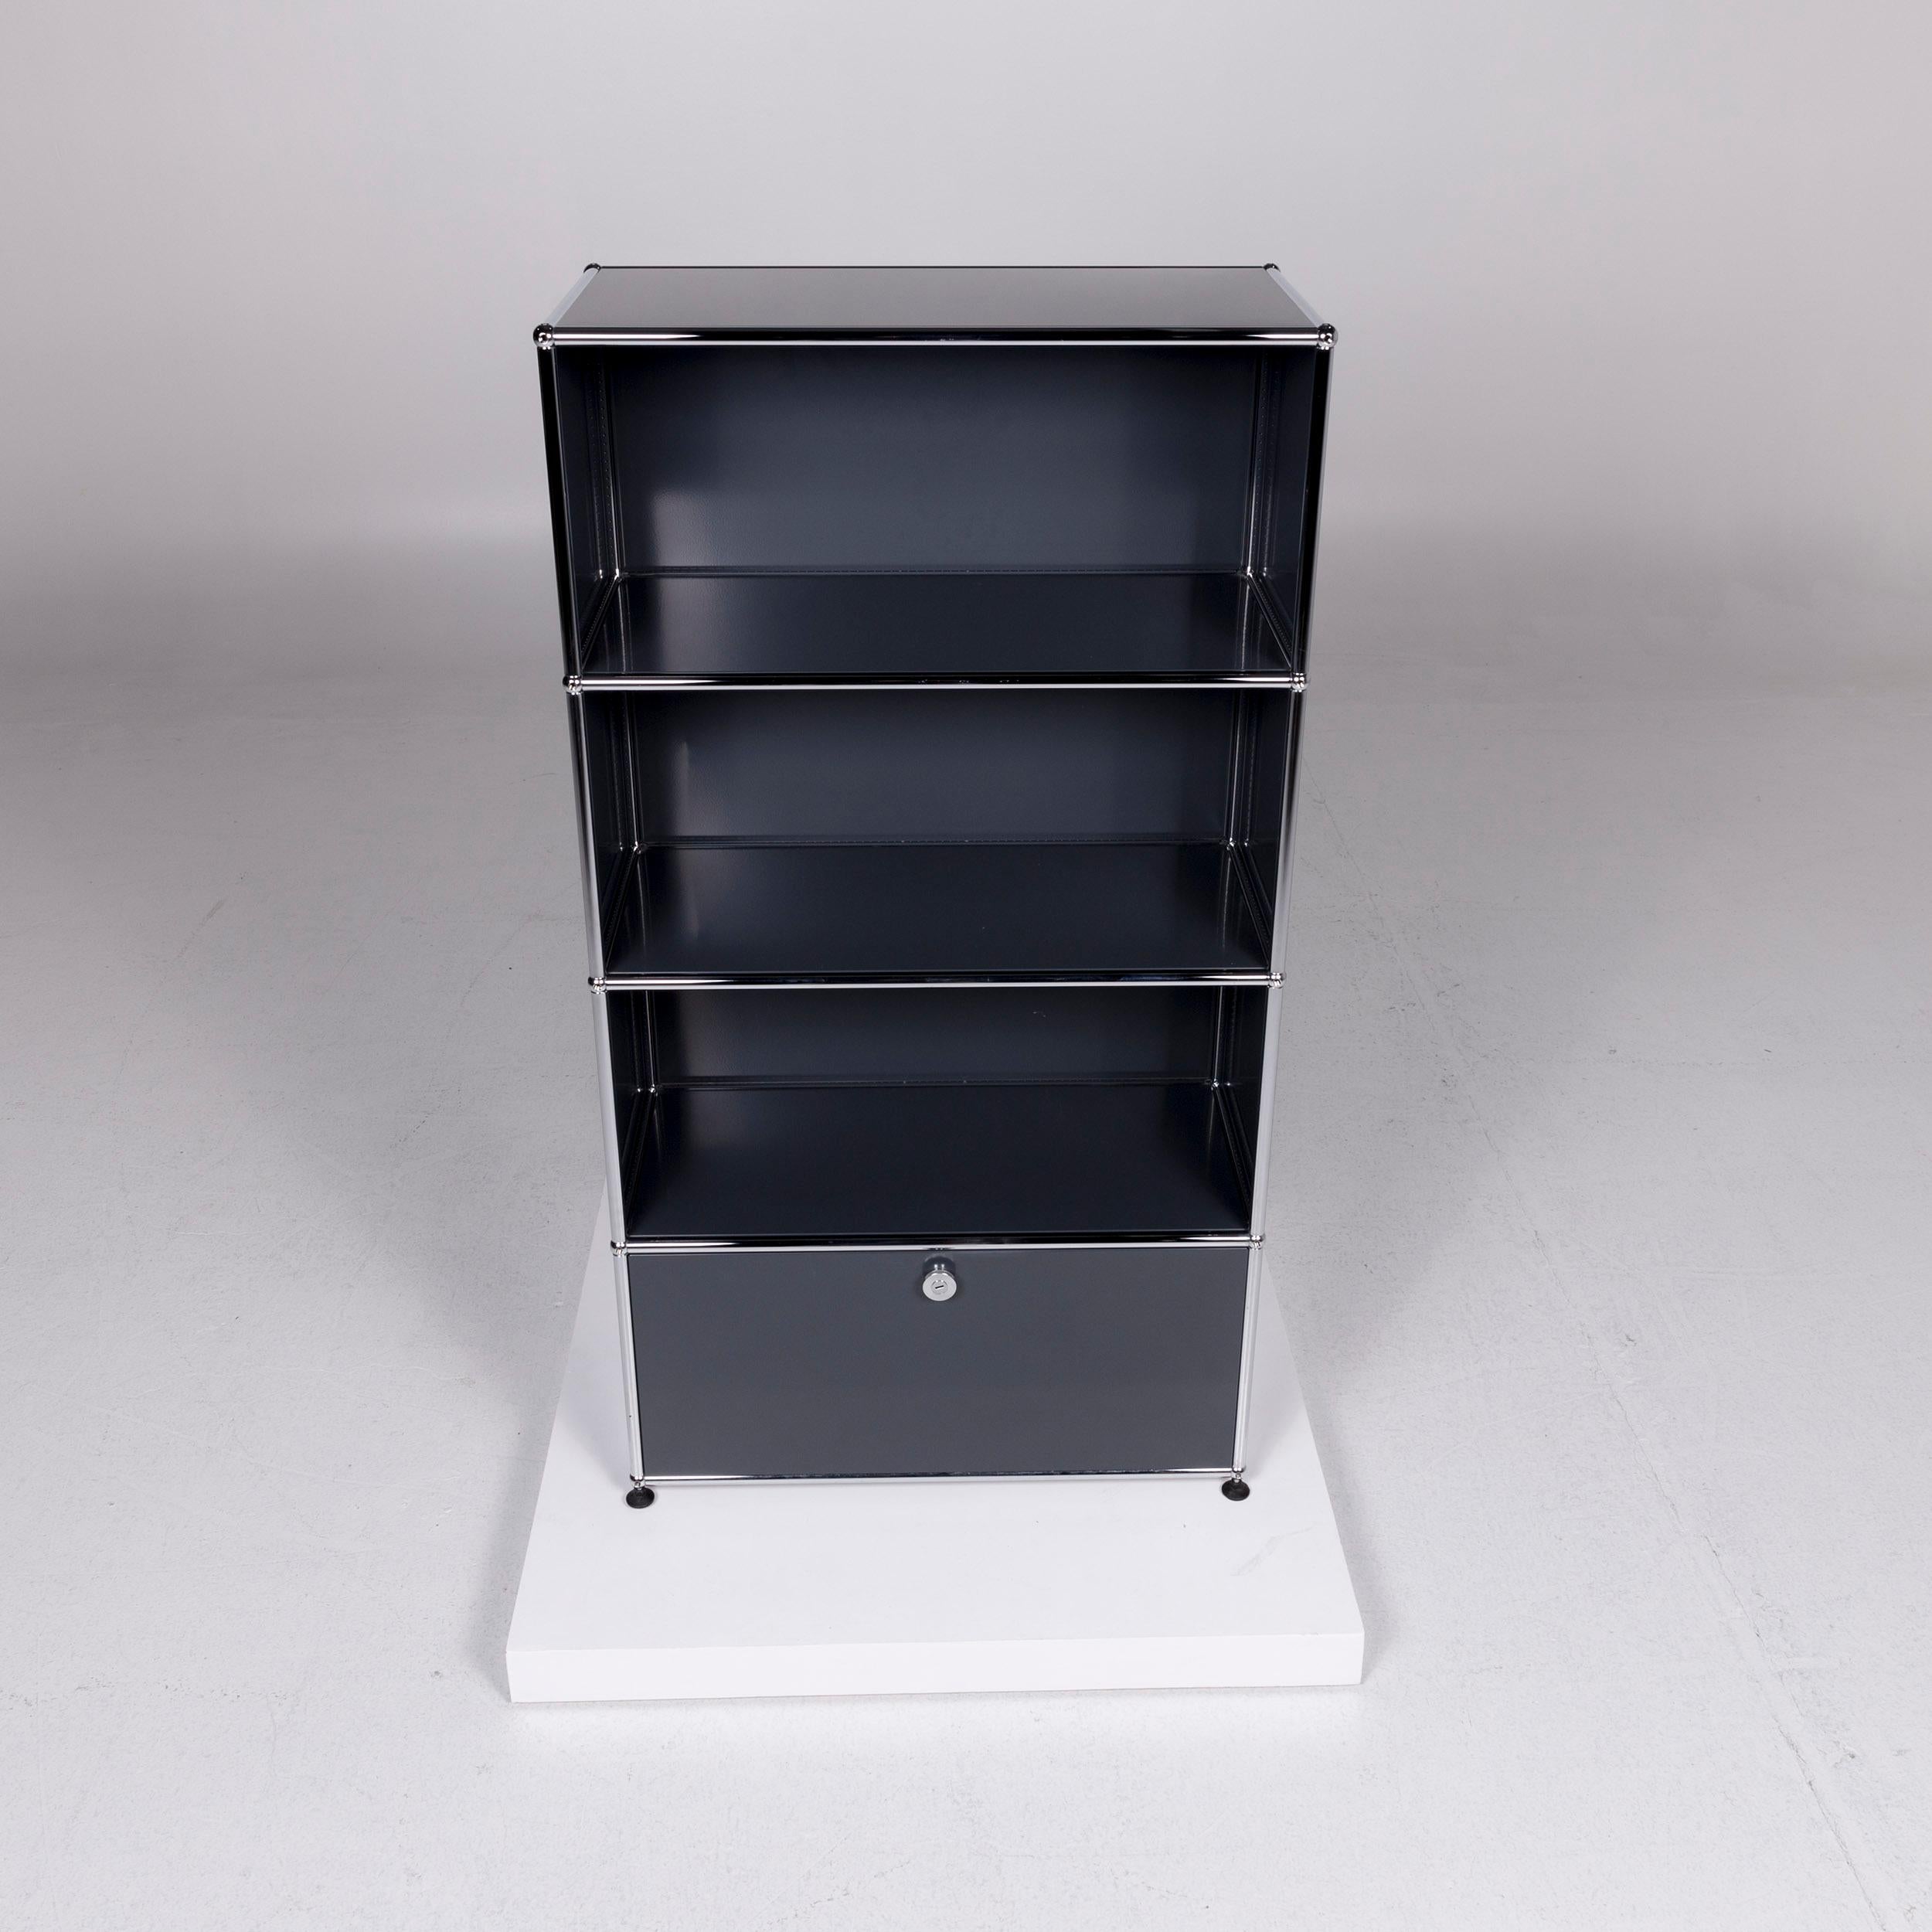 Usm Haller Metal Sideboard Anthracite Shelf Chrome Office Furniture In Excellent Condition For Sale In Cologne, DE